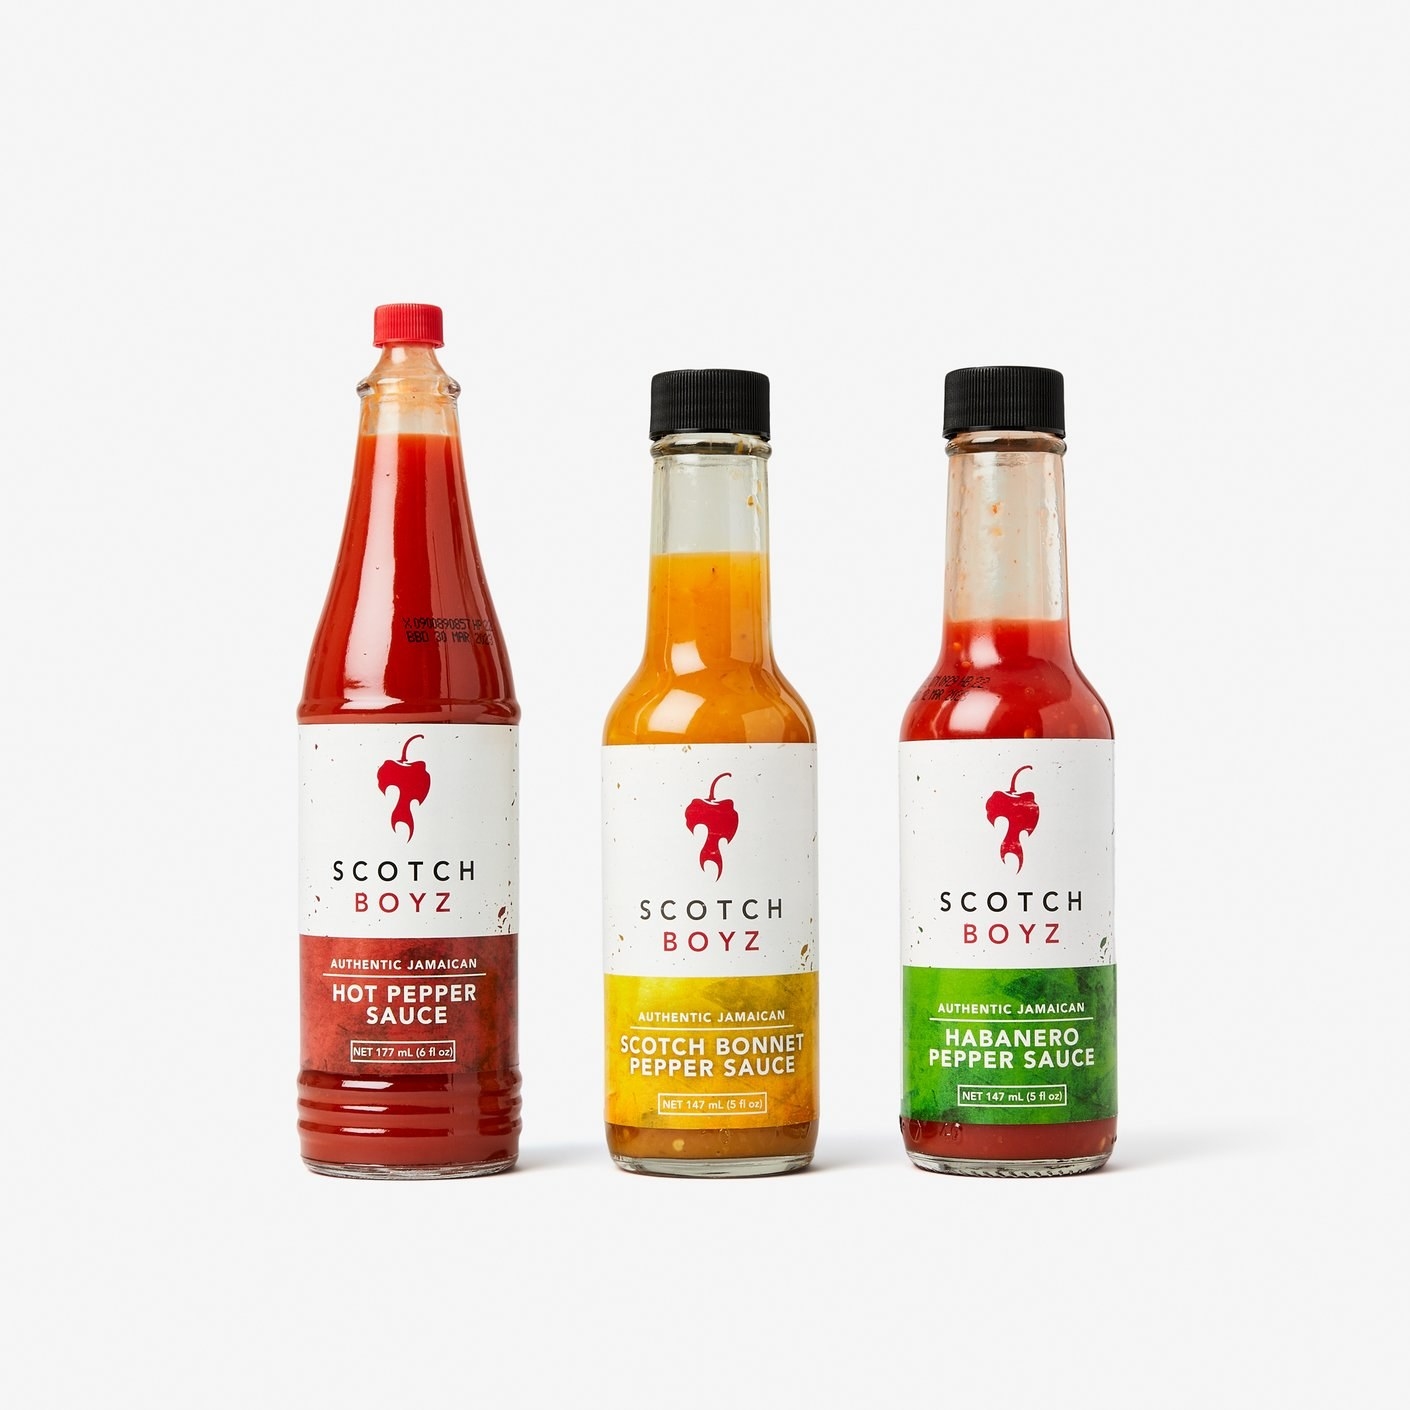 the three bottles of hot sauce